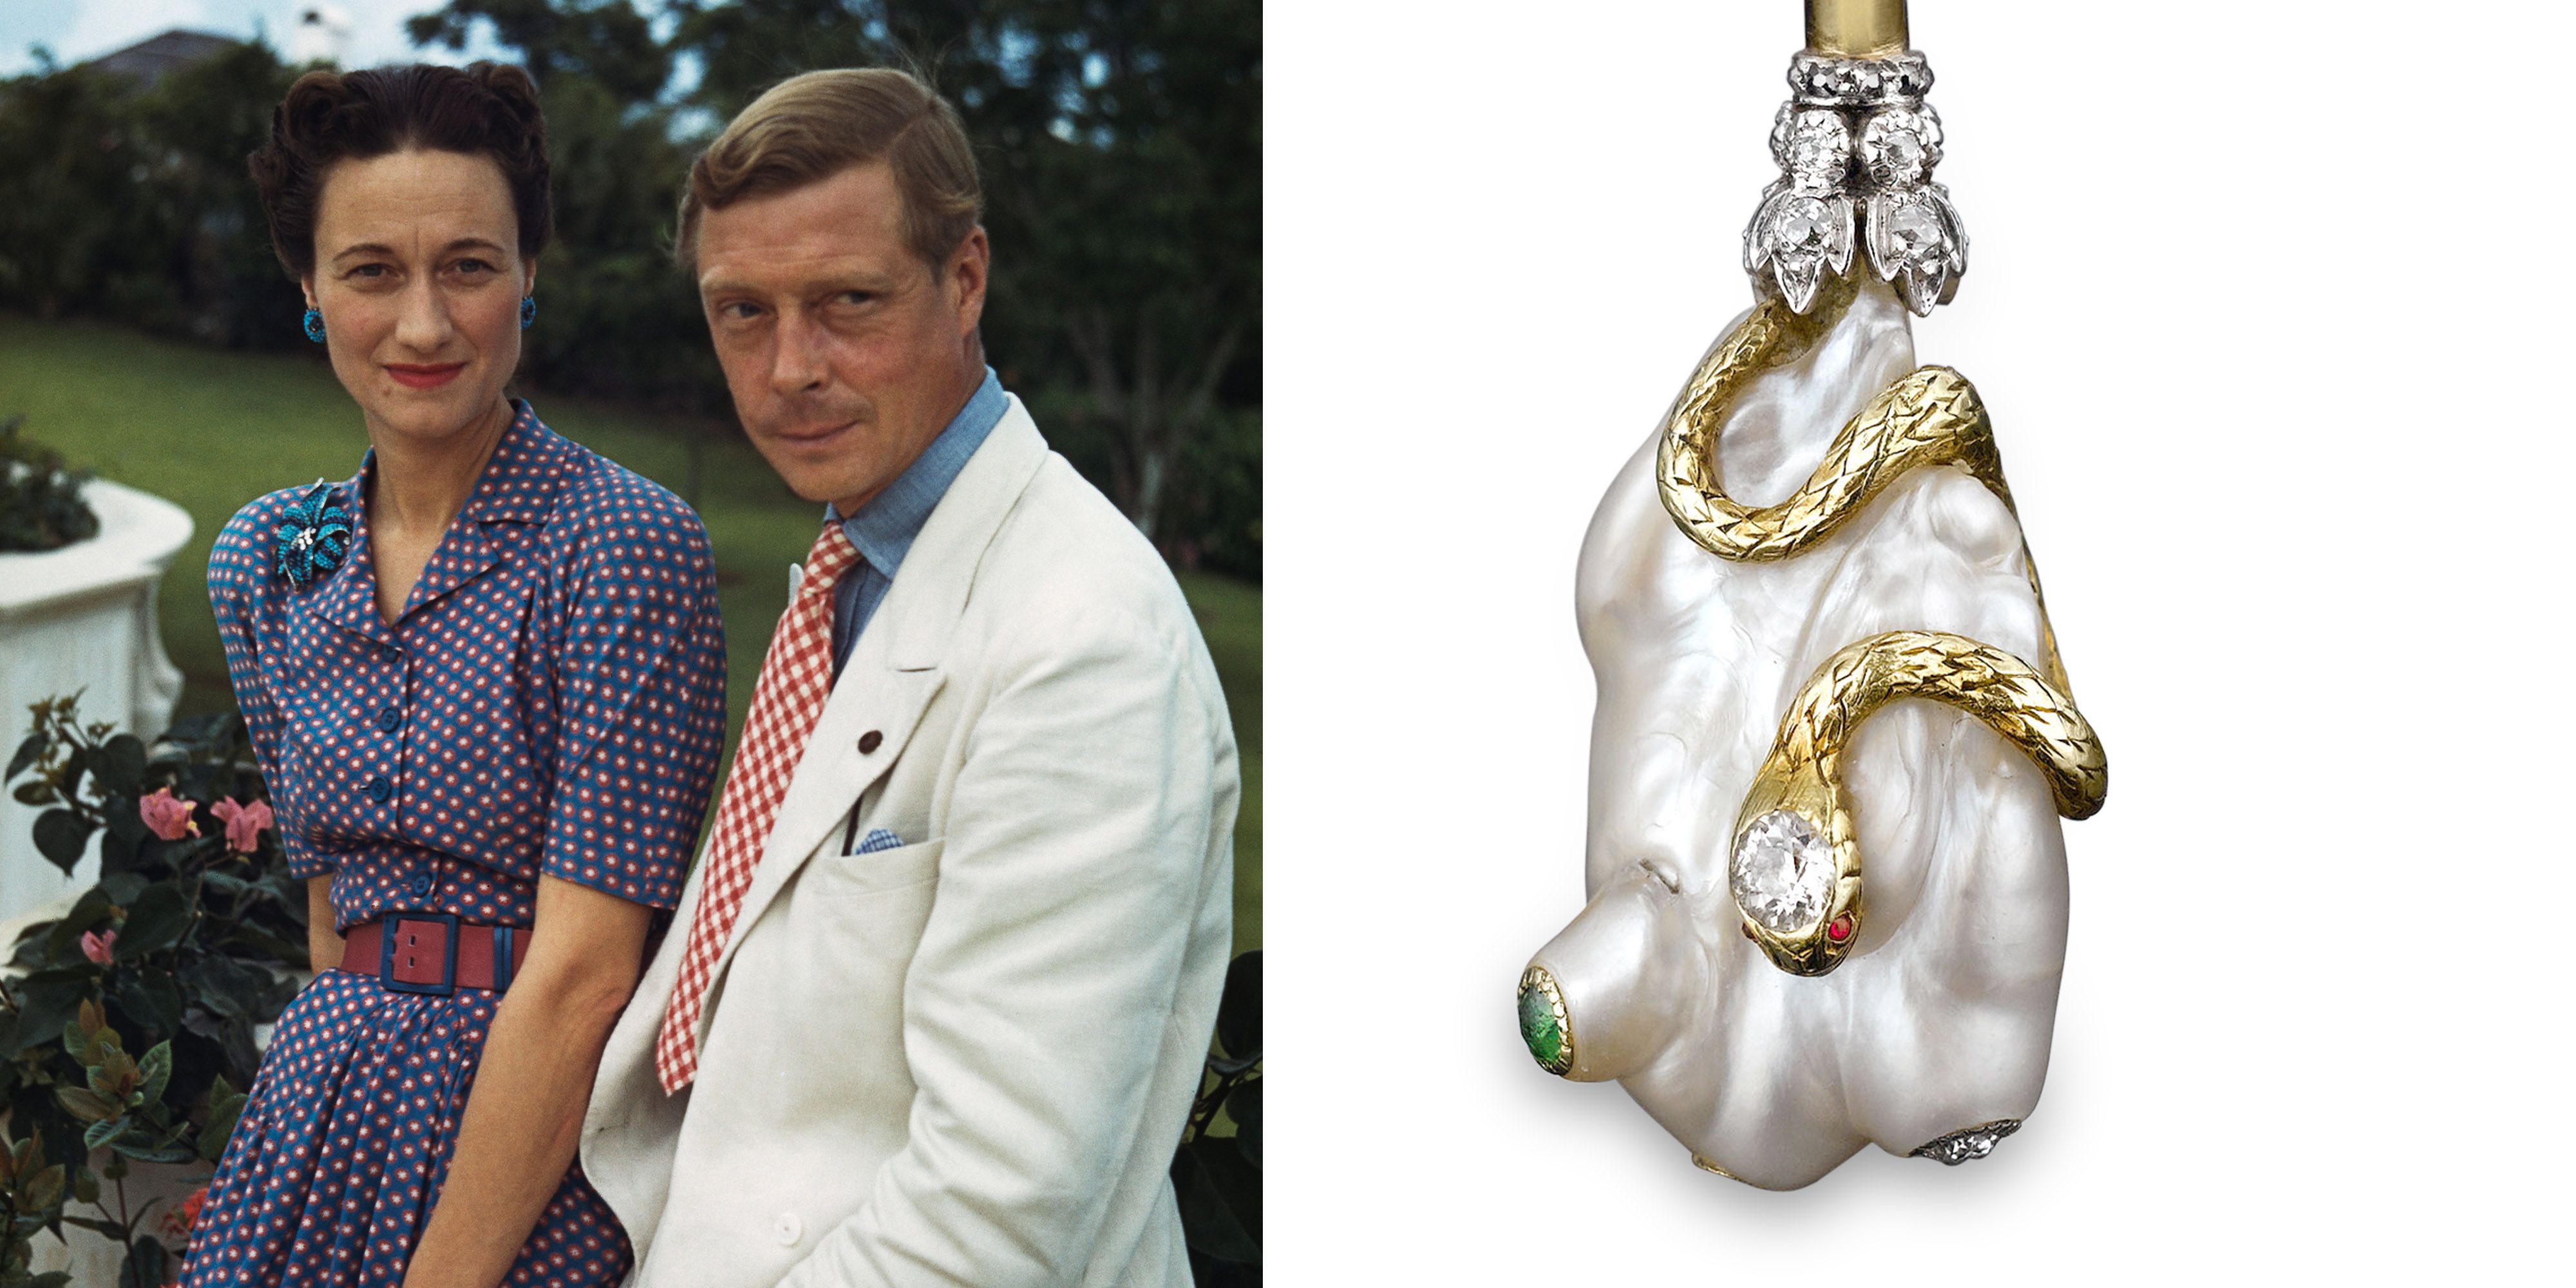 Jewelry Auction Wallis Simpson's Brooch